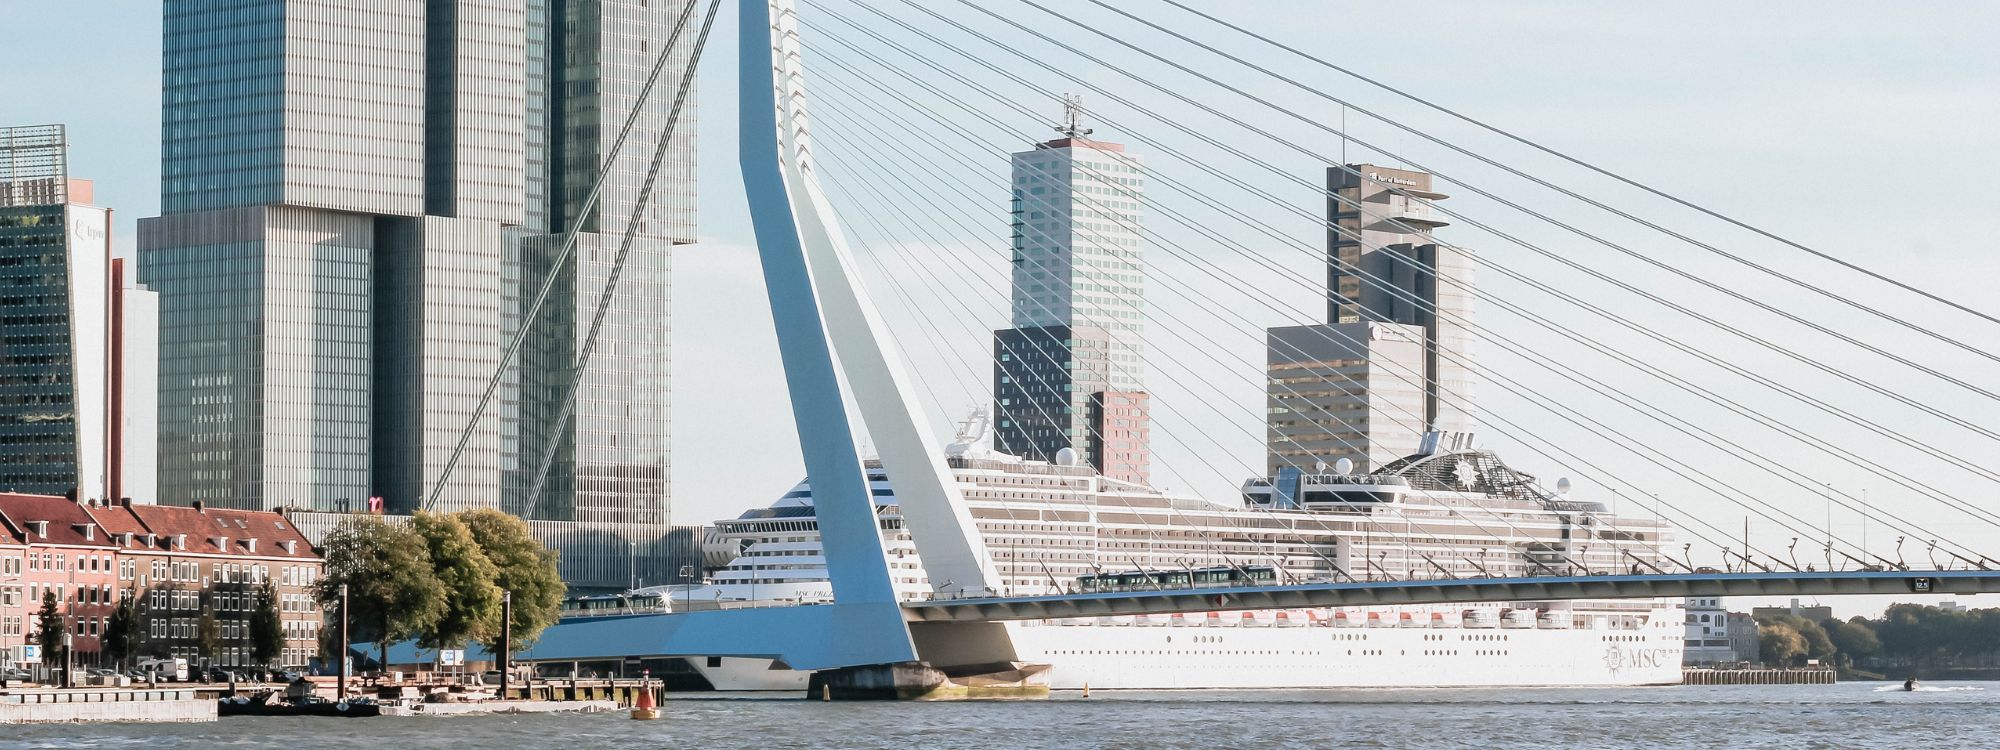 Cruise Terminal Rotterdam Guide